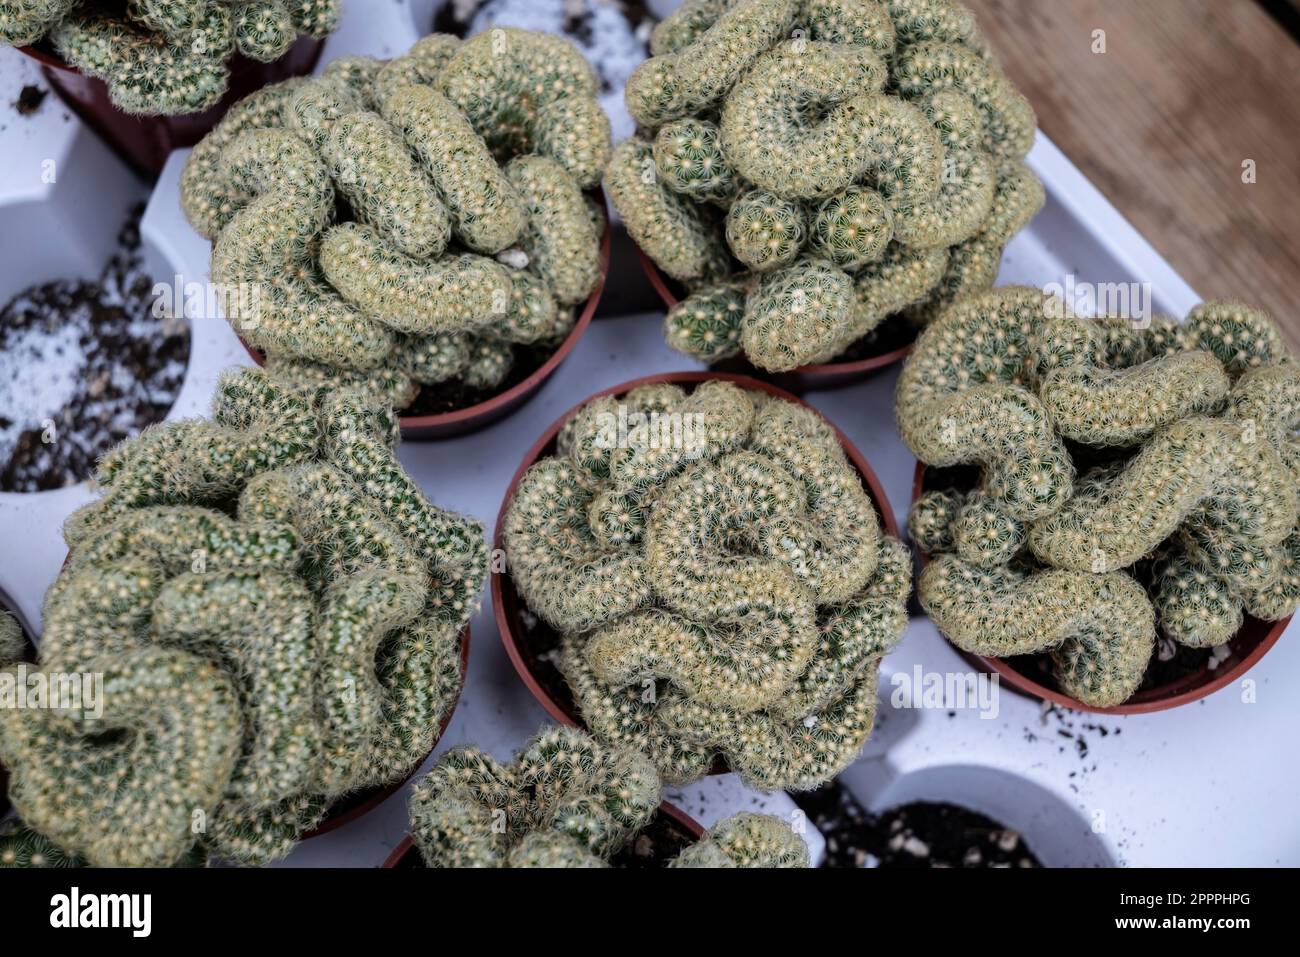 The Brain Cactus, also known as the Mammillaria Elongata 'Cristata' cactus, is native to central Mexico. Stock Photo